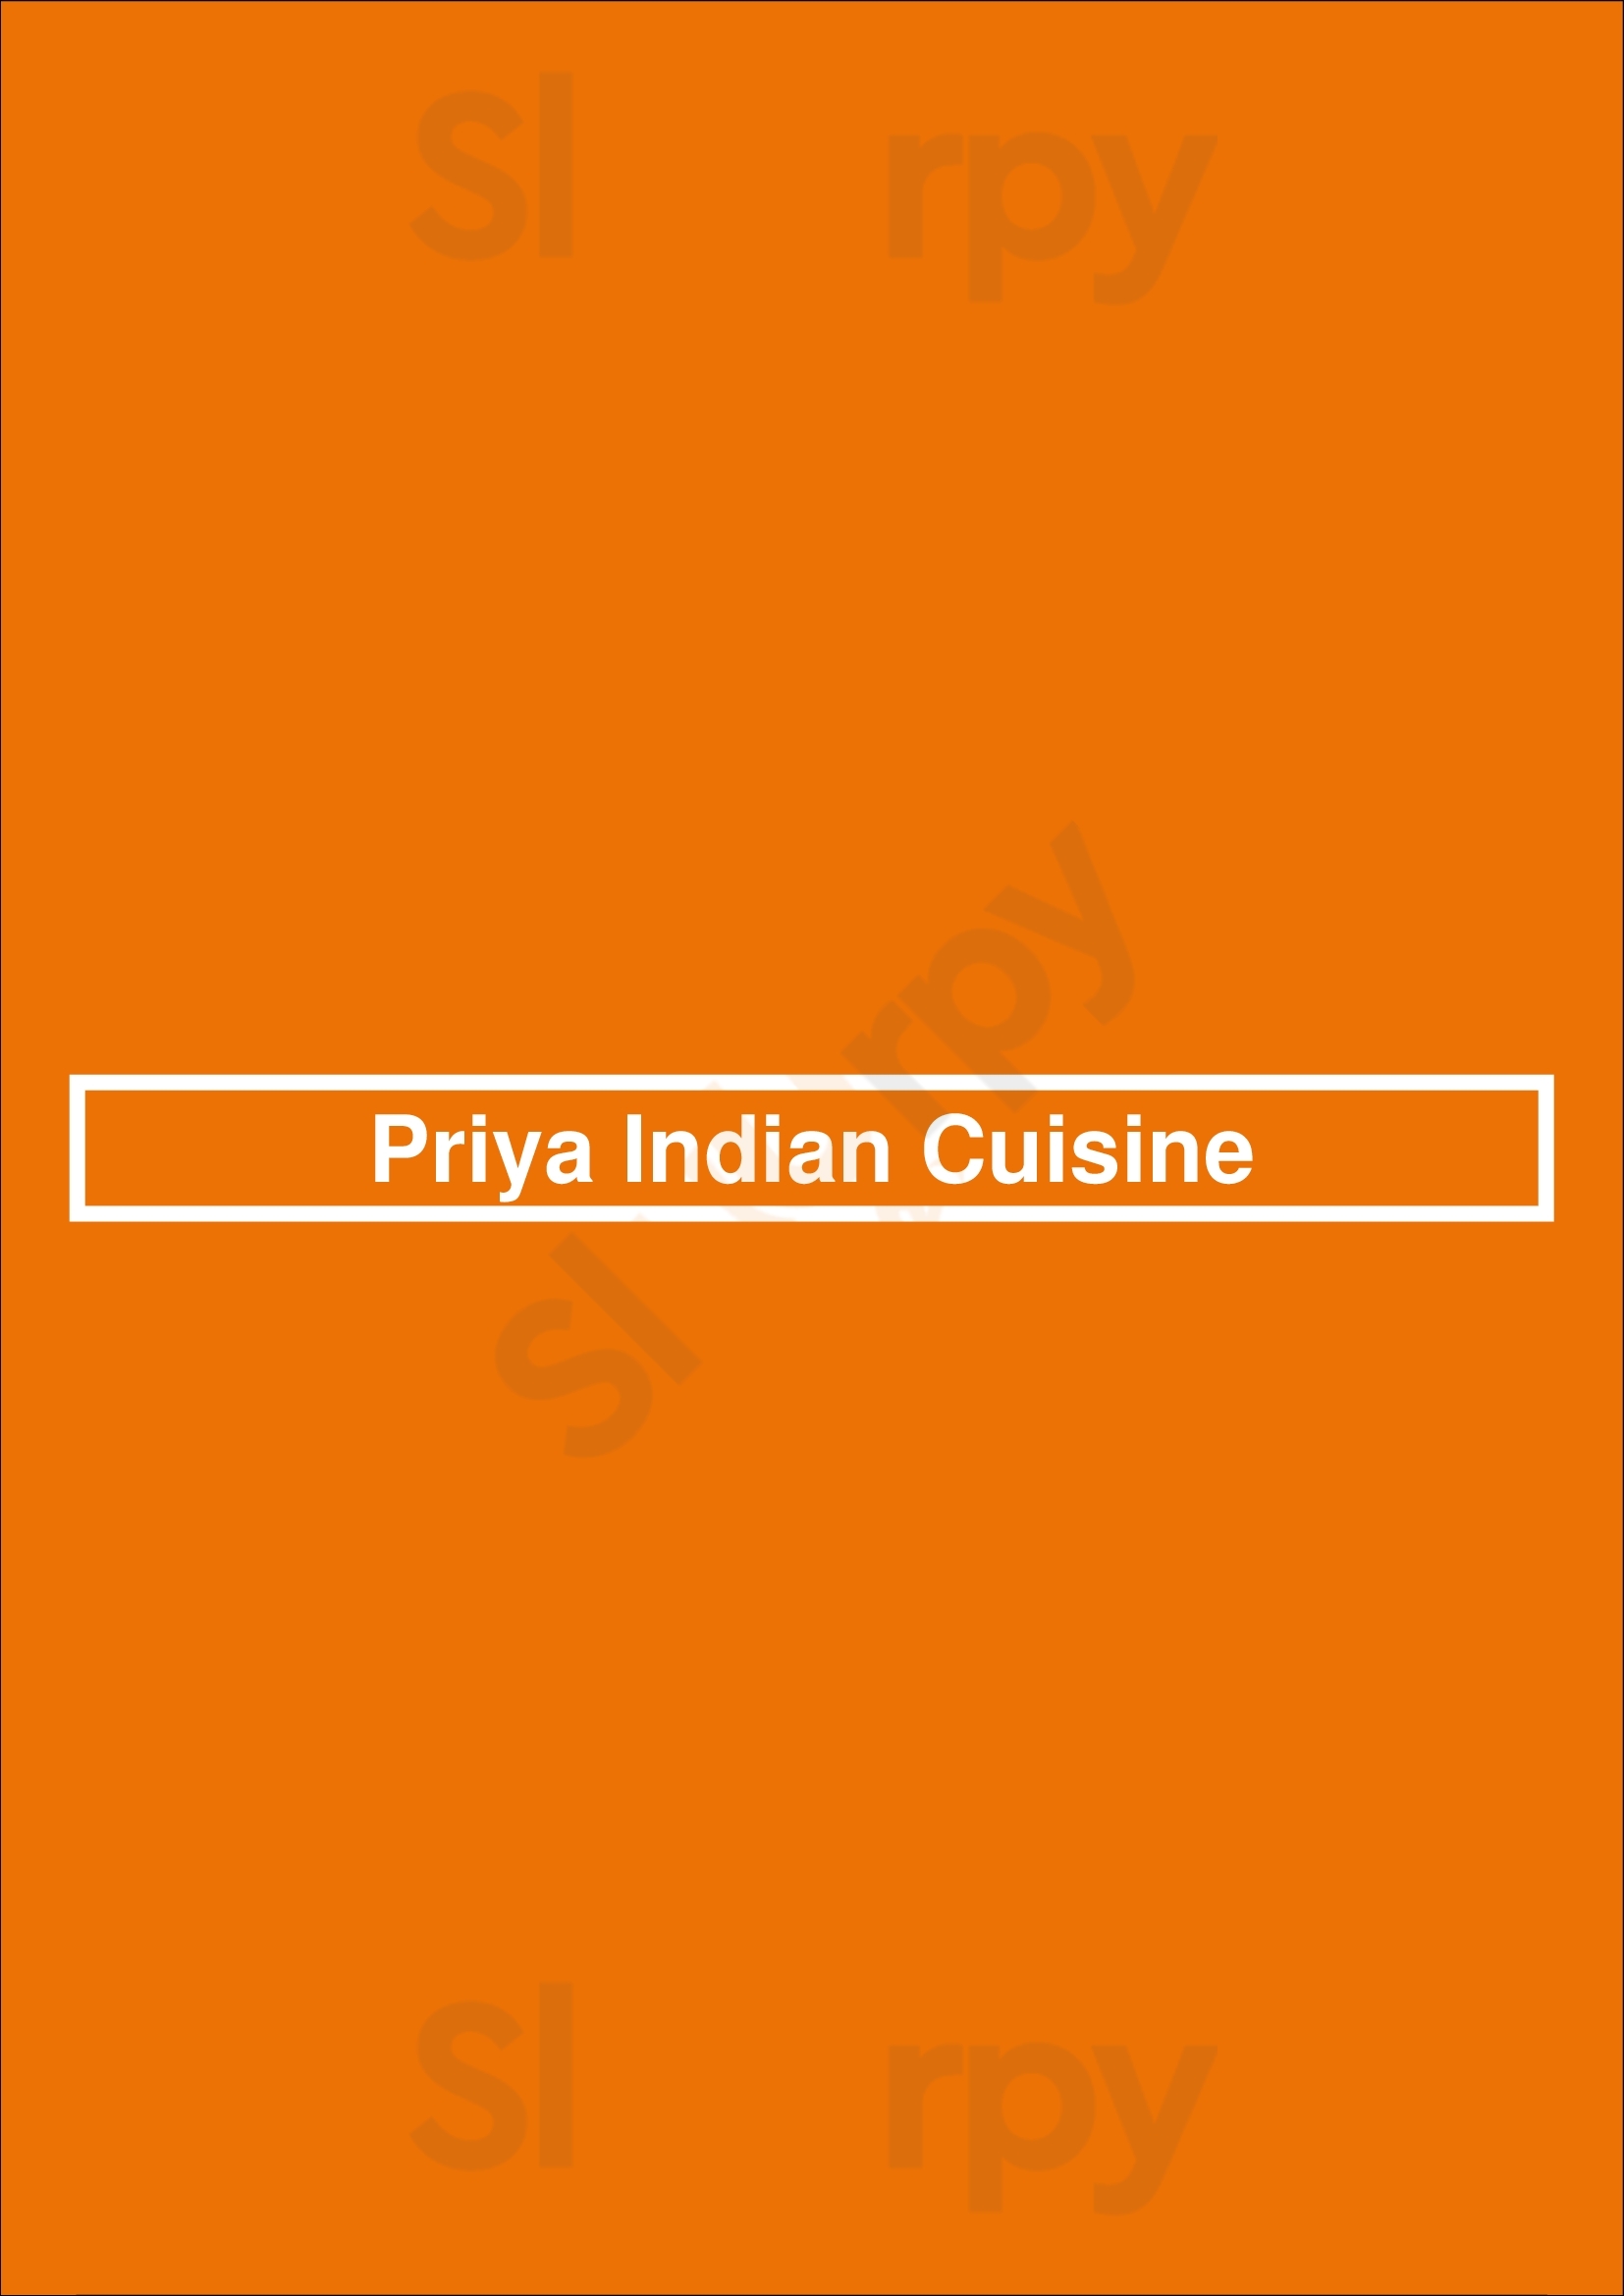 Priya Indian Cuisine Lowell Menu - 1